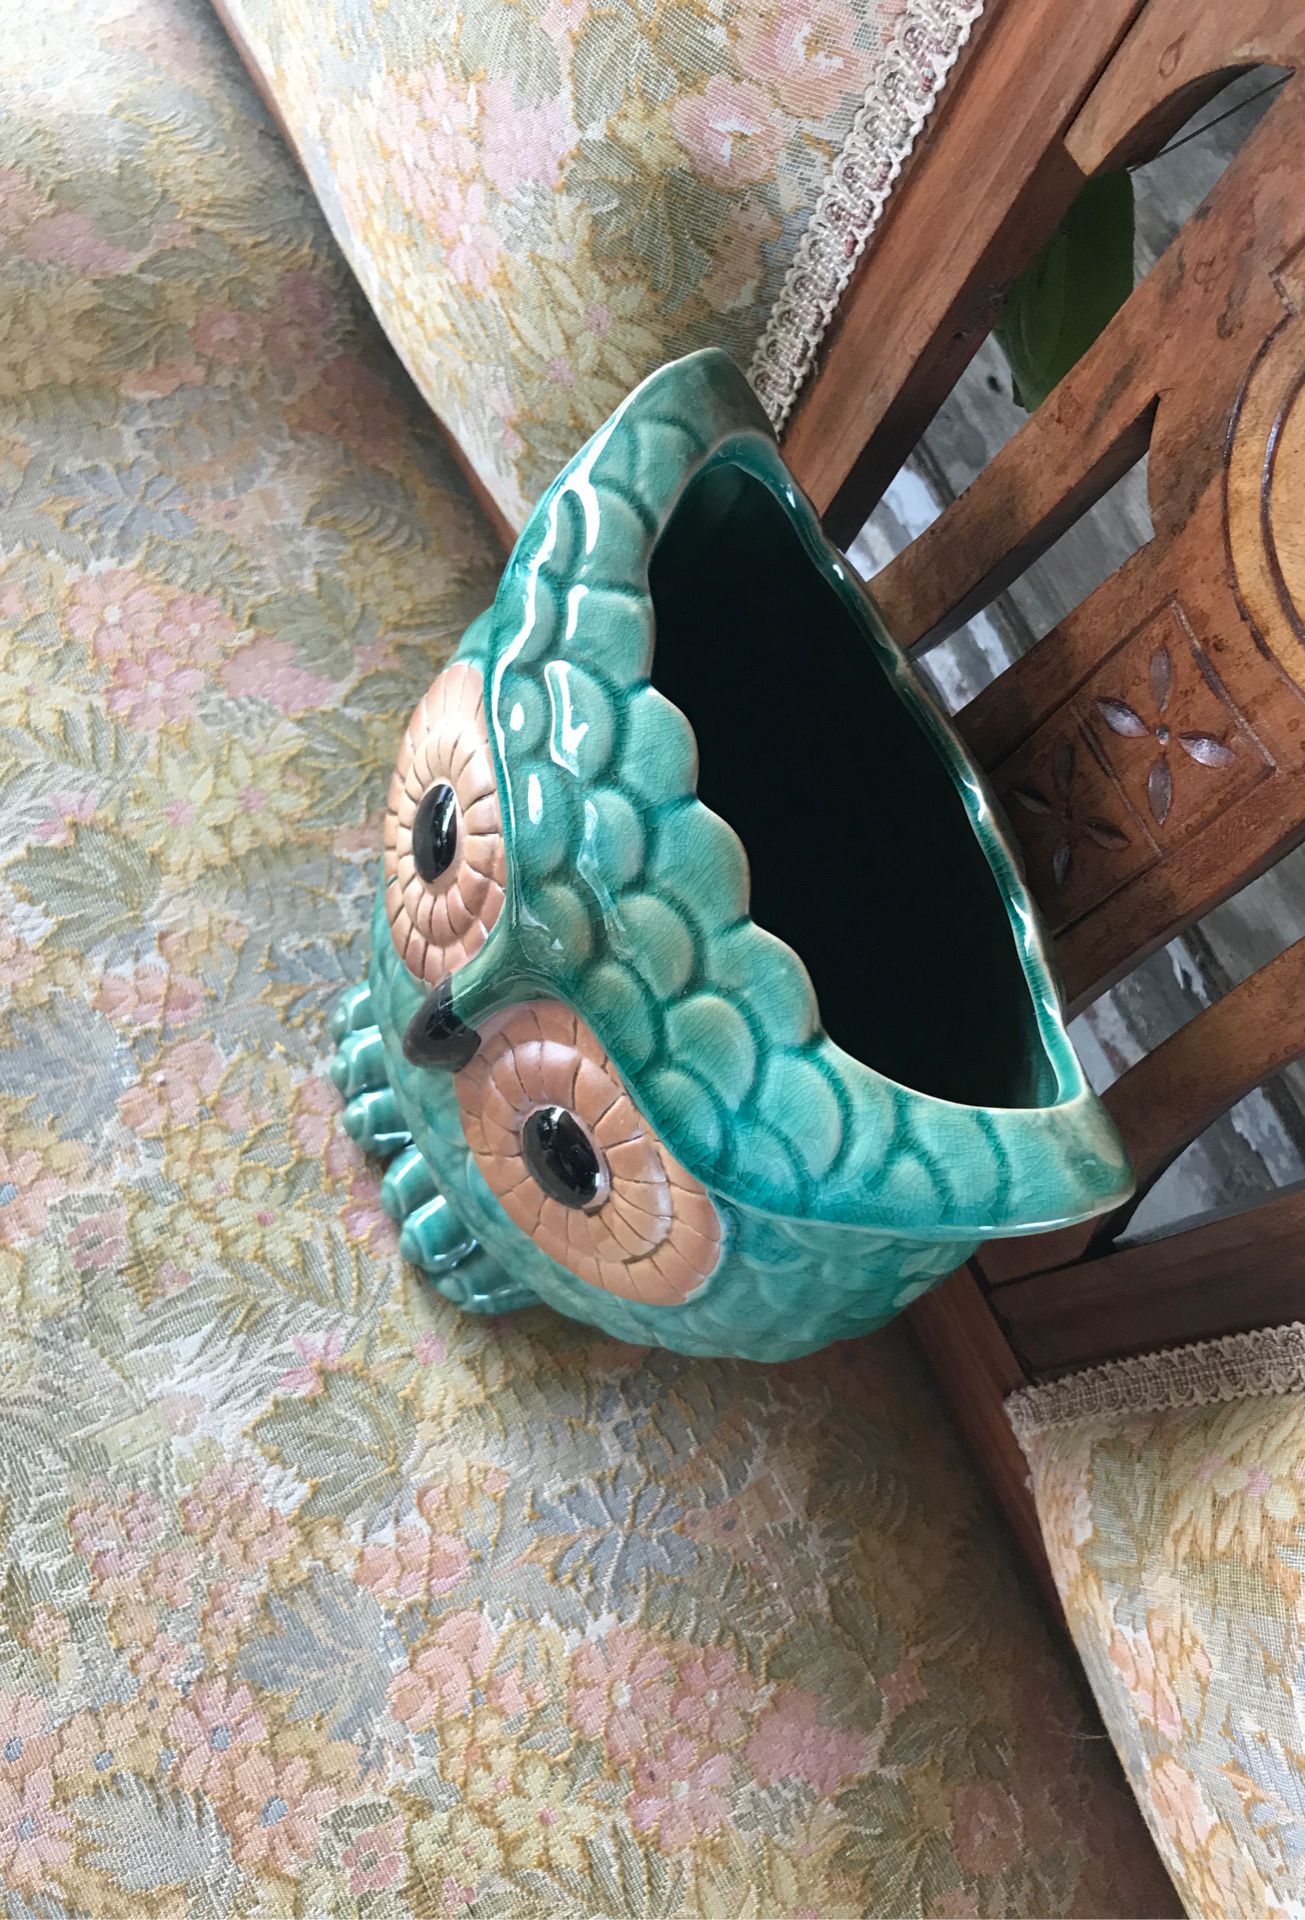 Decorative Owl Vase